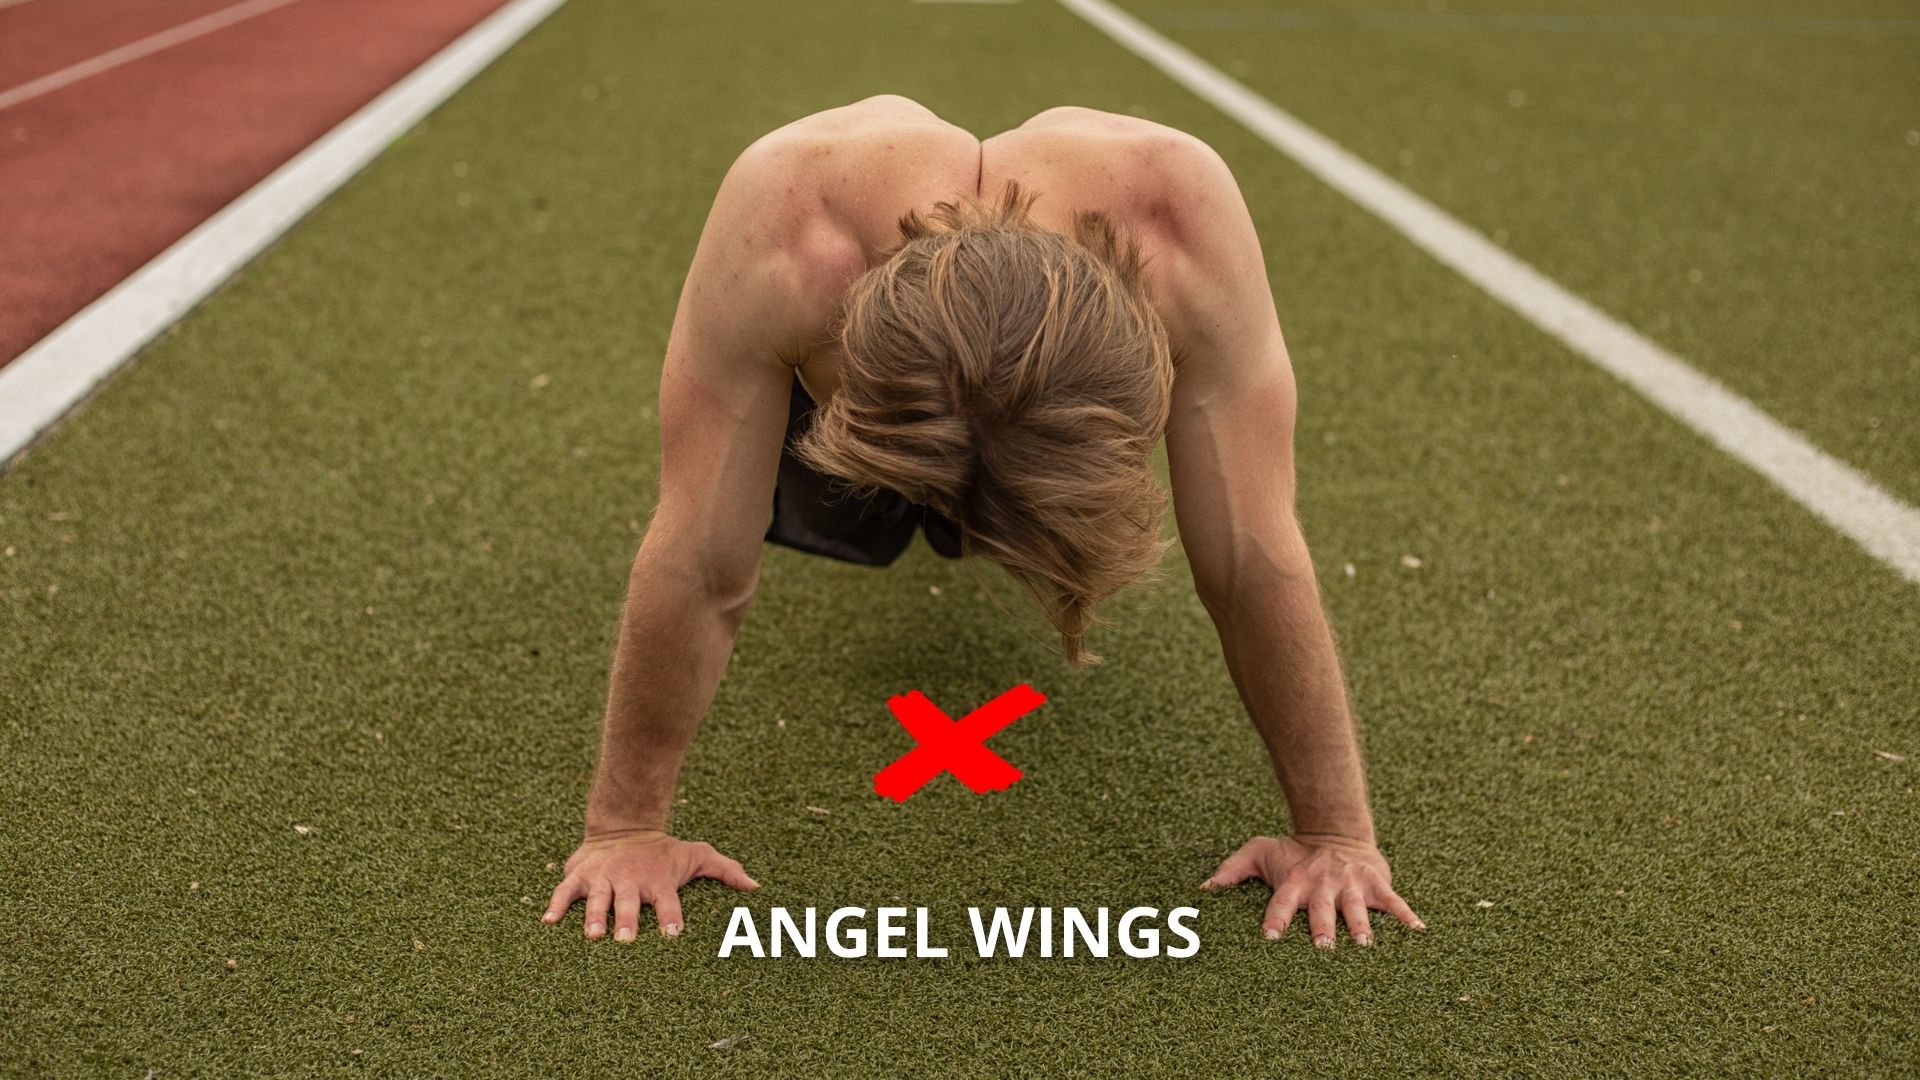 02 Liegestütze lernen Anfänger - Angel Wings vermeiden